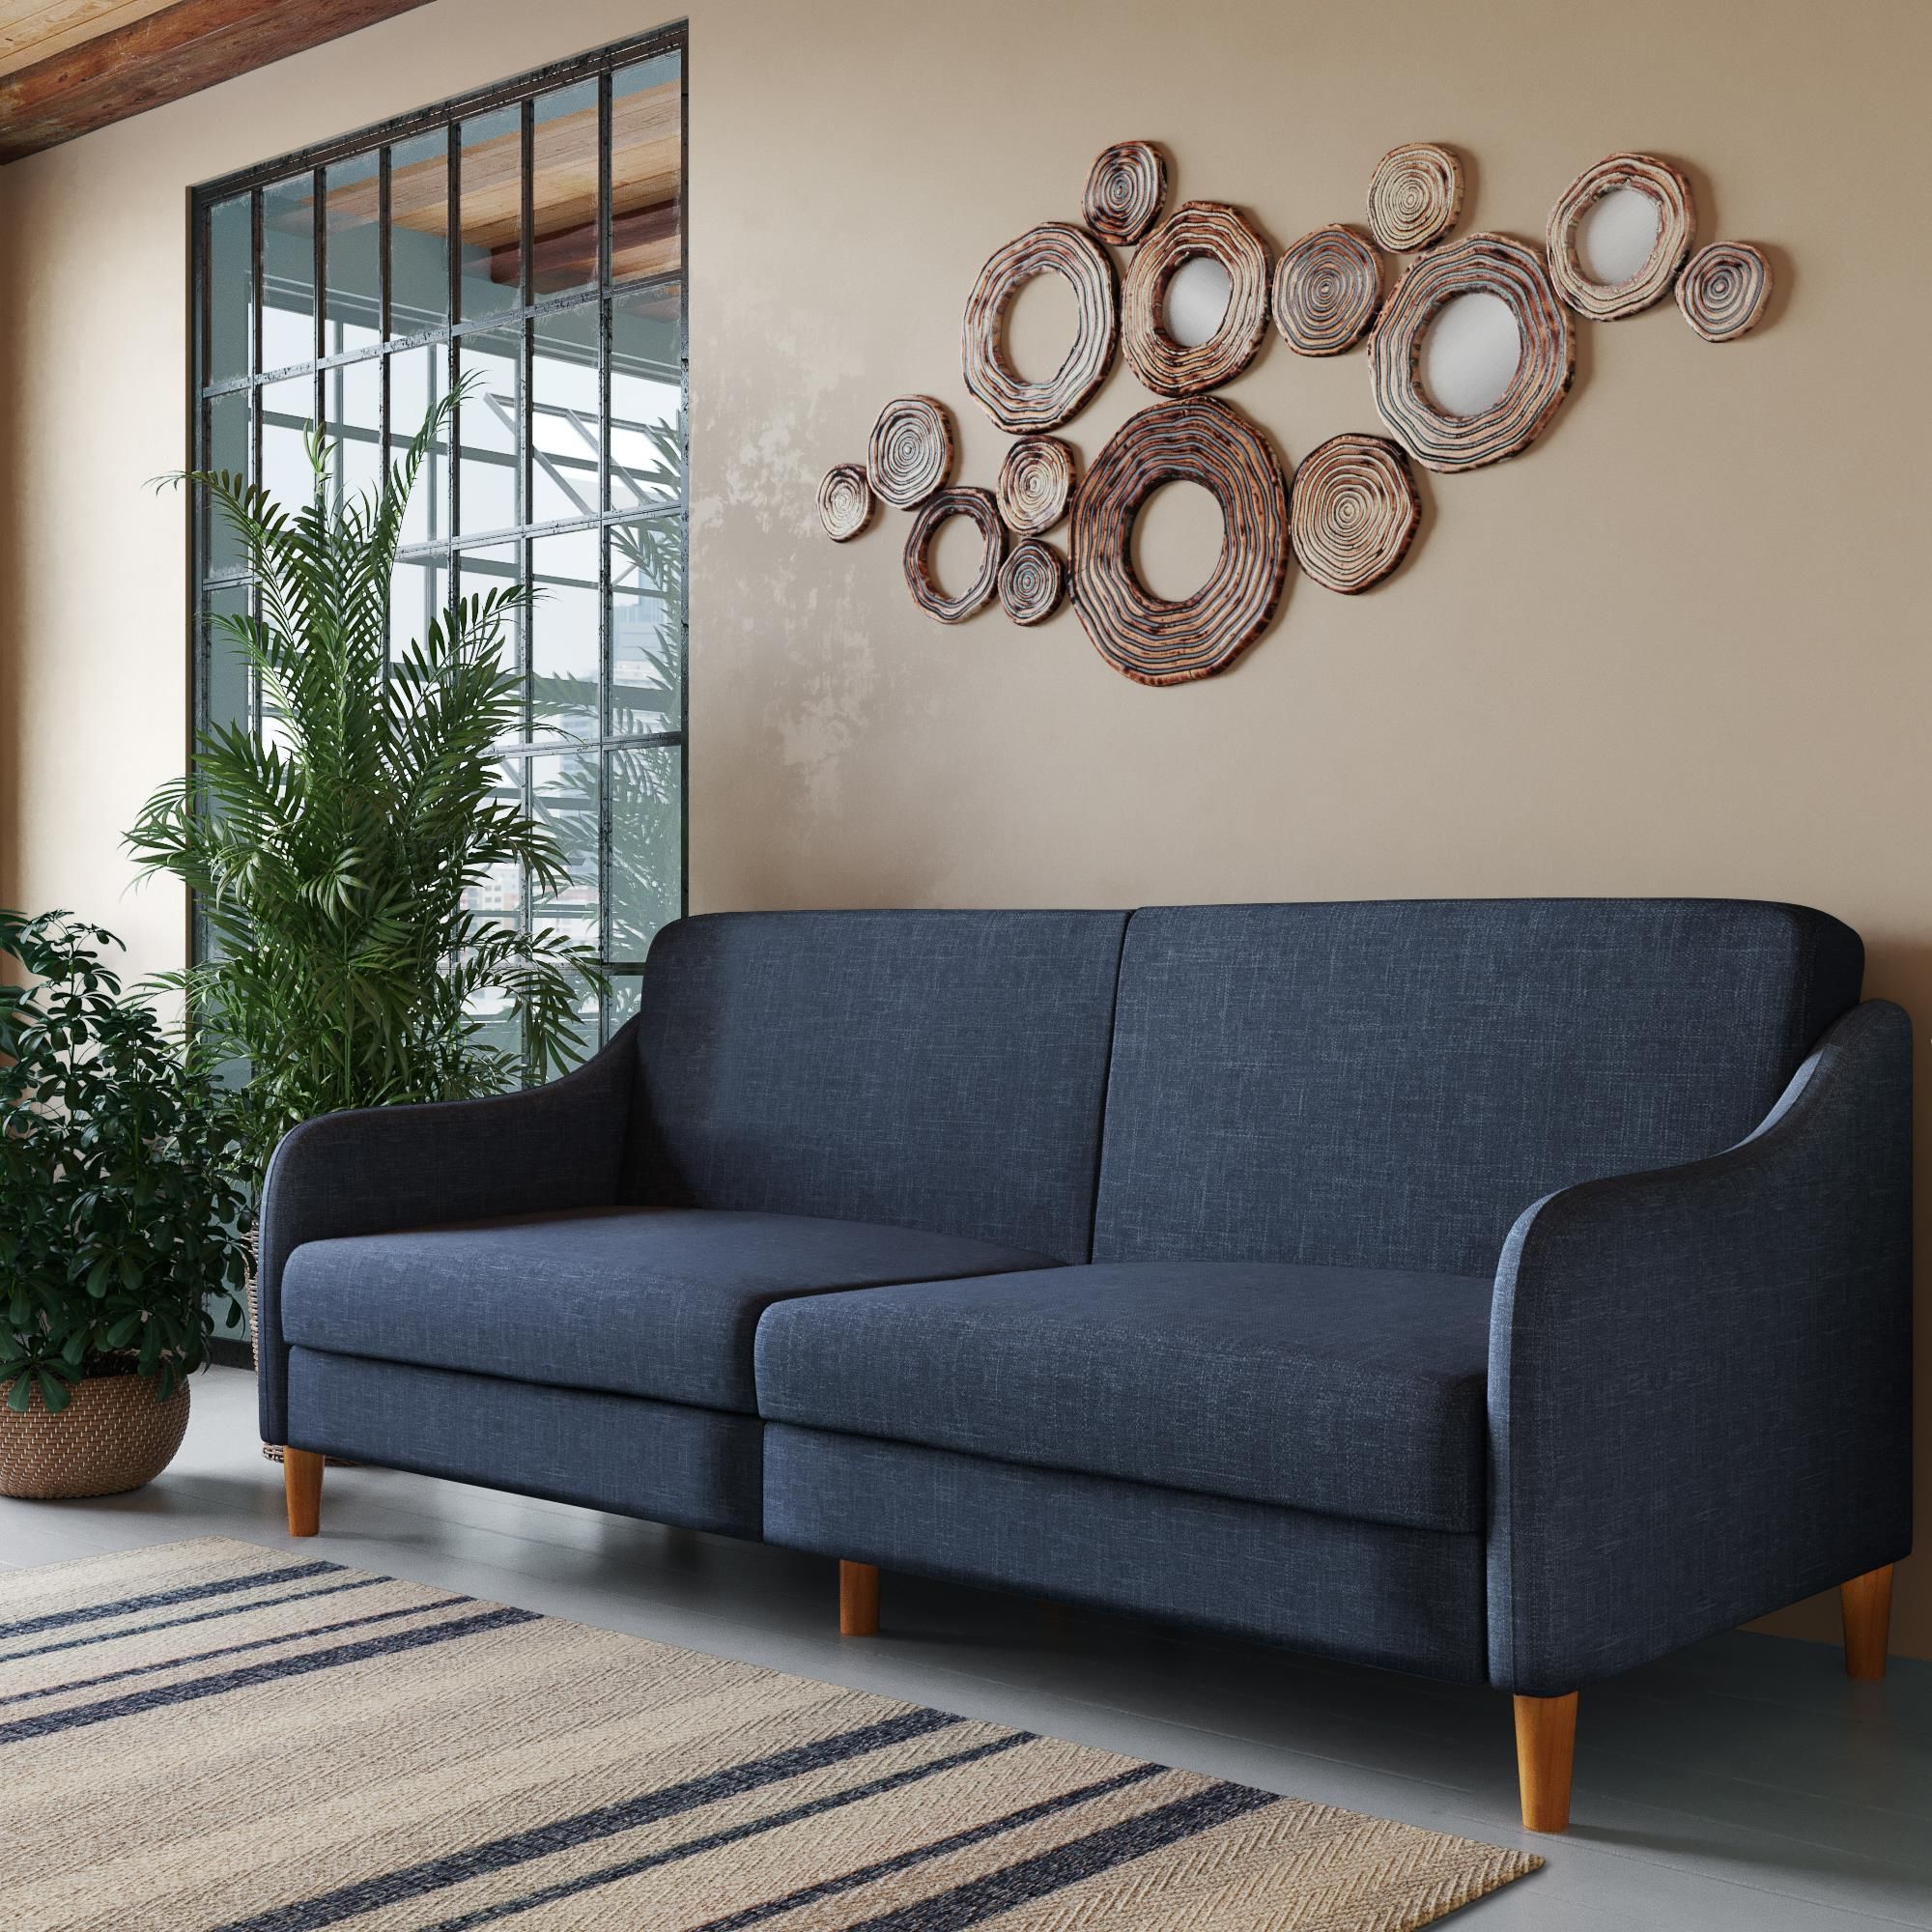 Desert Fields Jasper Coil Futon, Navy Linen – Walmart | Living Room Regarding Navy Linen Coil Sofas (View 6 of 20)